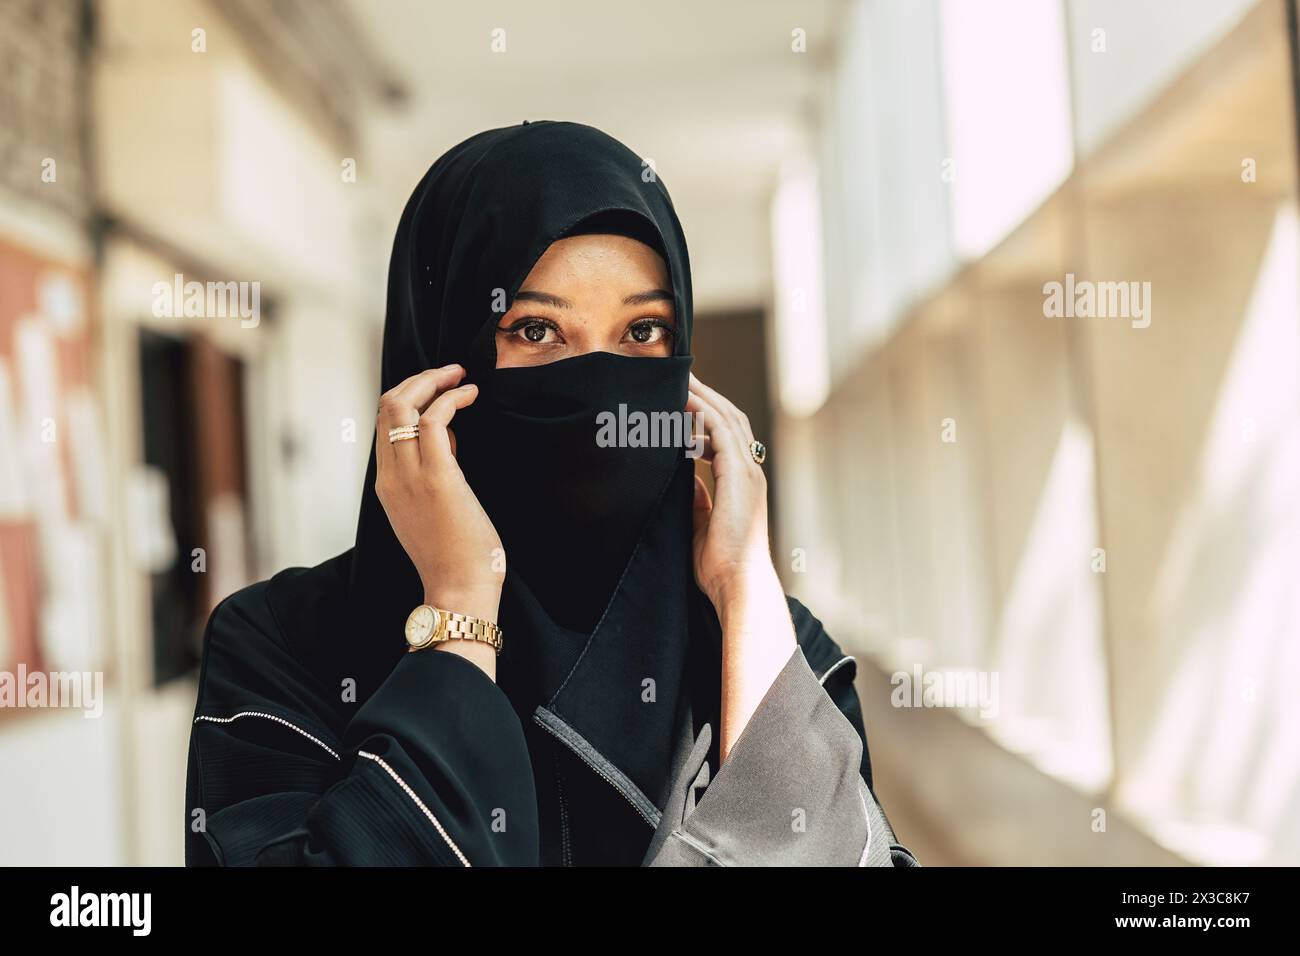 Muslim niqab woman close hide her face. Arab saudi girl closeup close face with black chador. Stock Photo